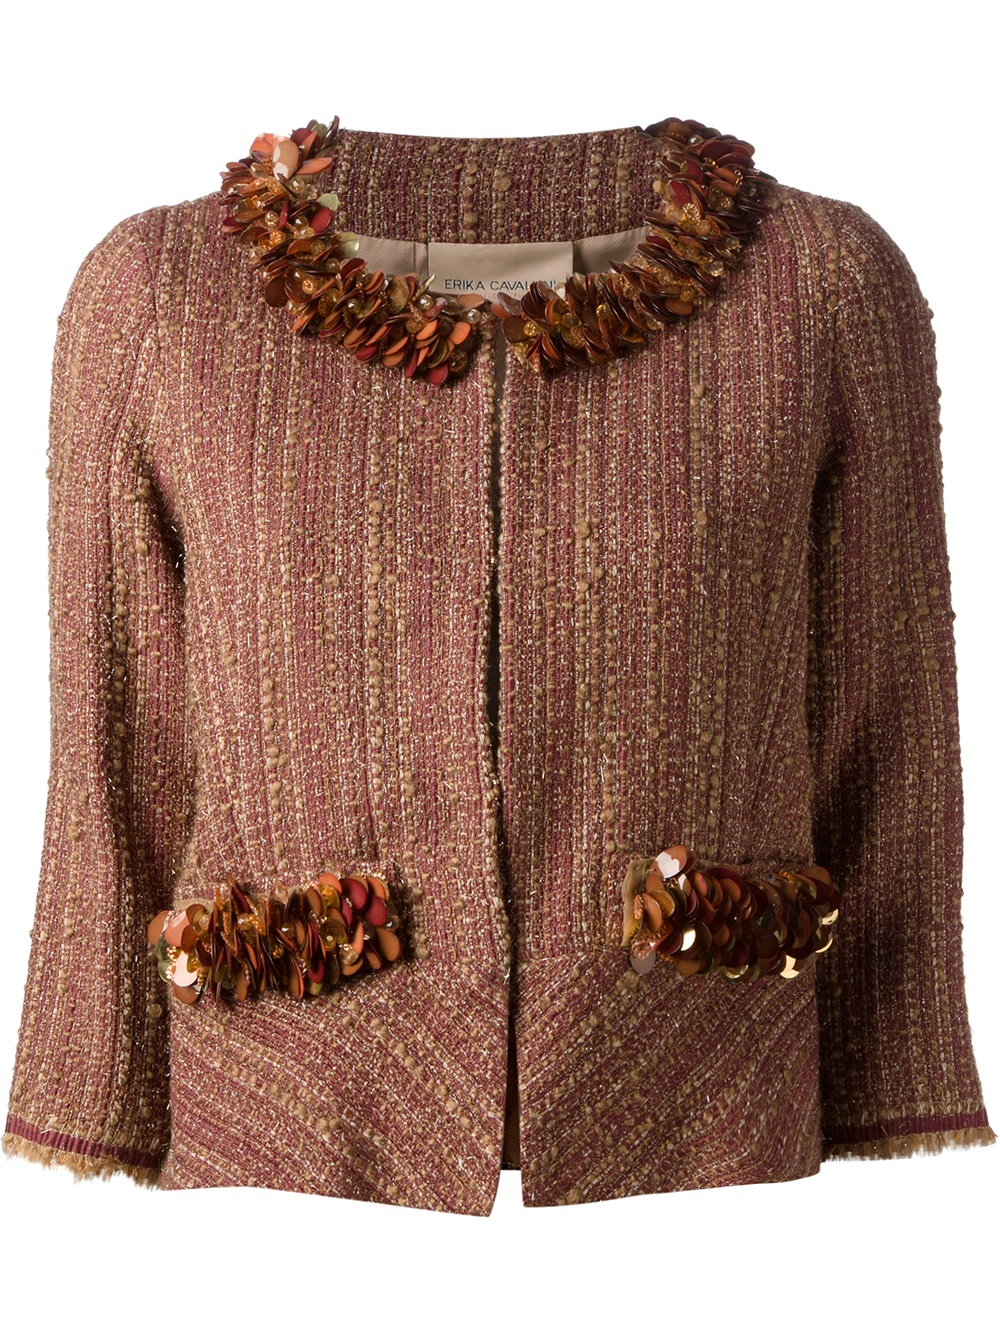 Lyst - Erika Cavallini Semi Couture Embellished Boucle Jacket in Purple